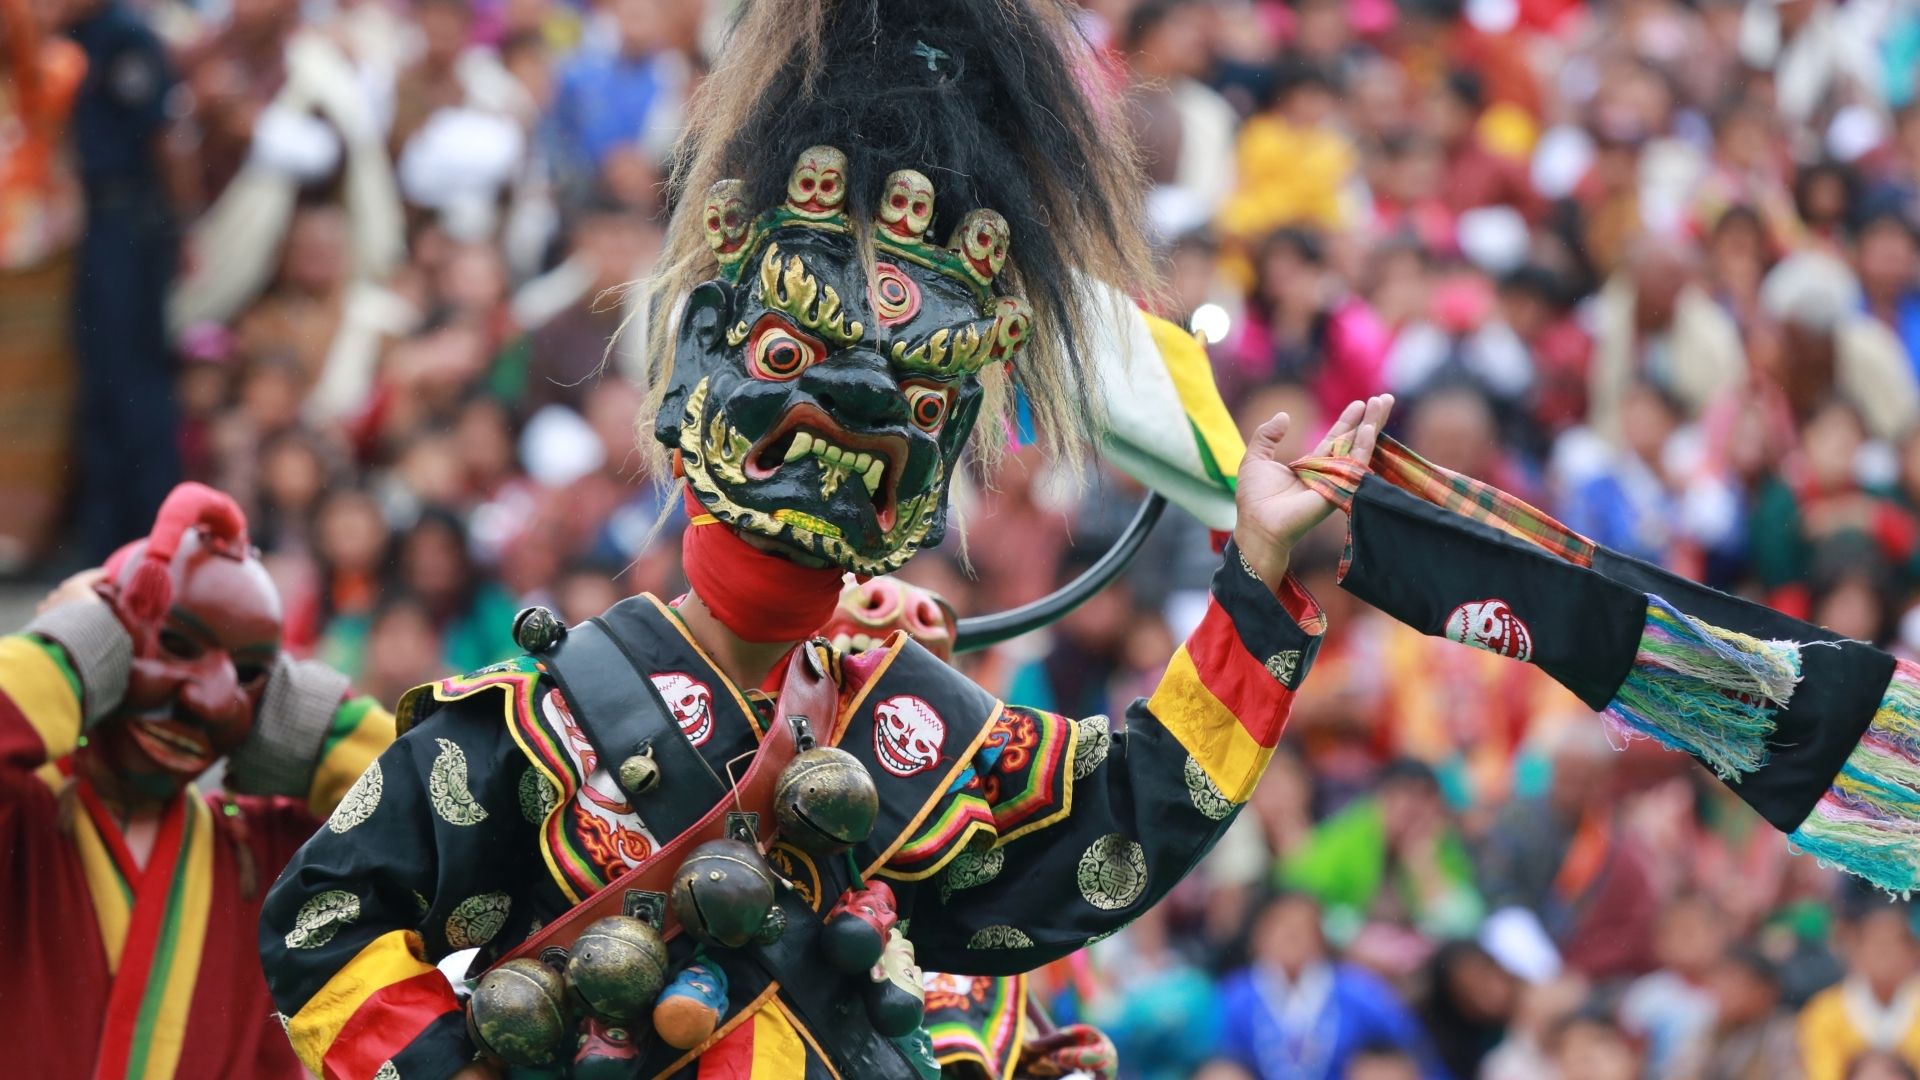 Bhutan tsetchu mask dance 